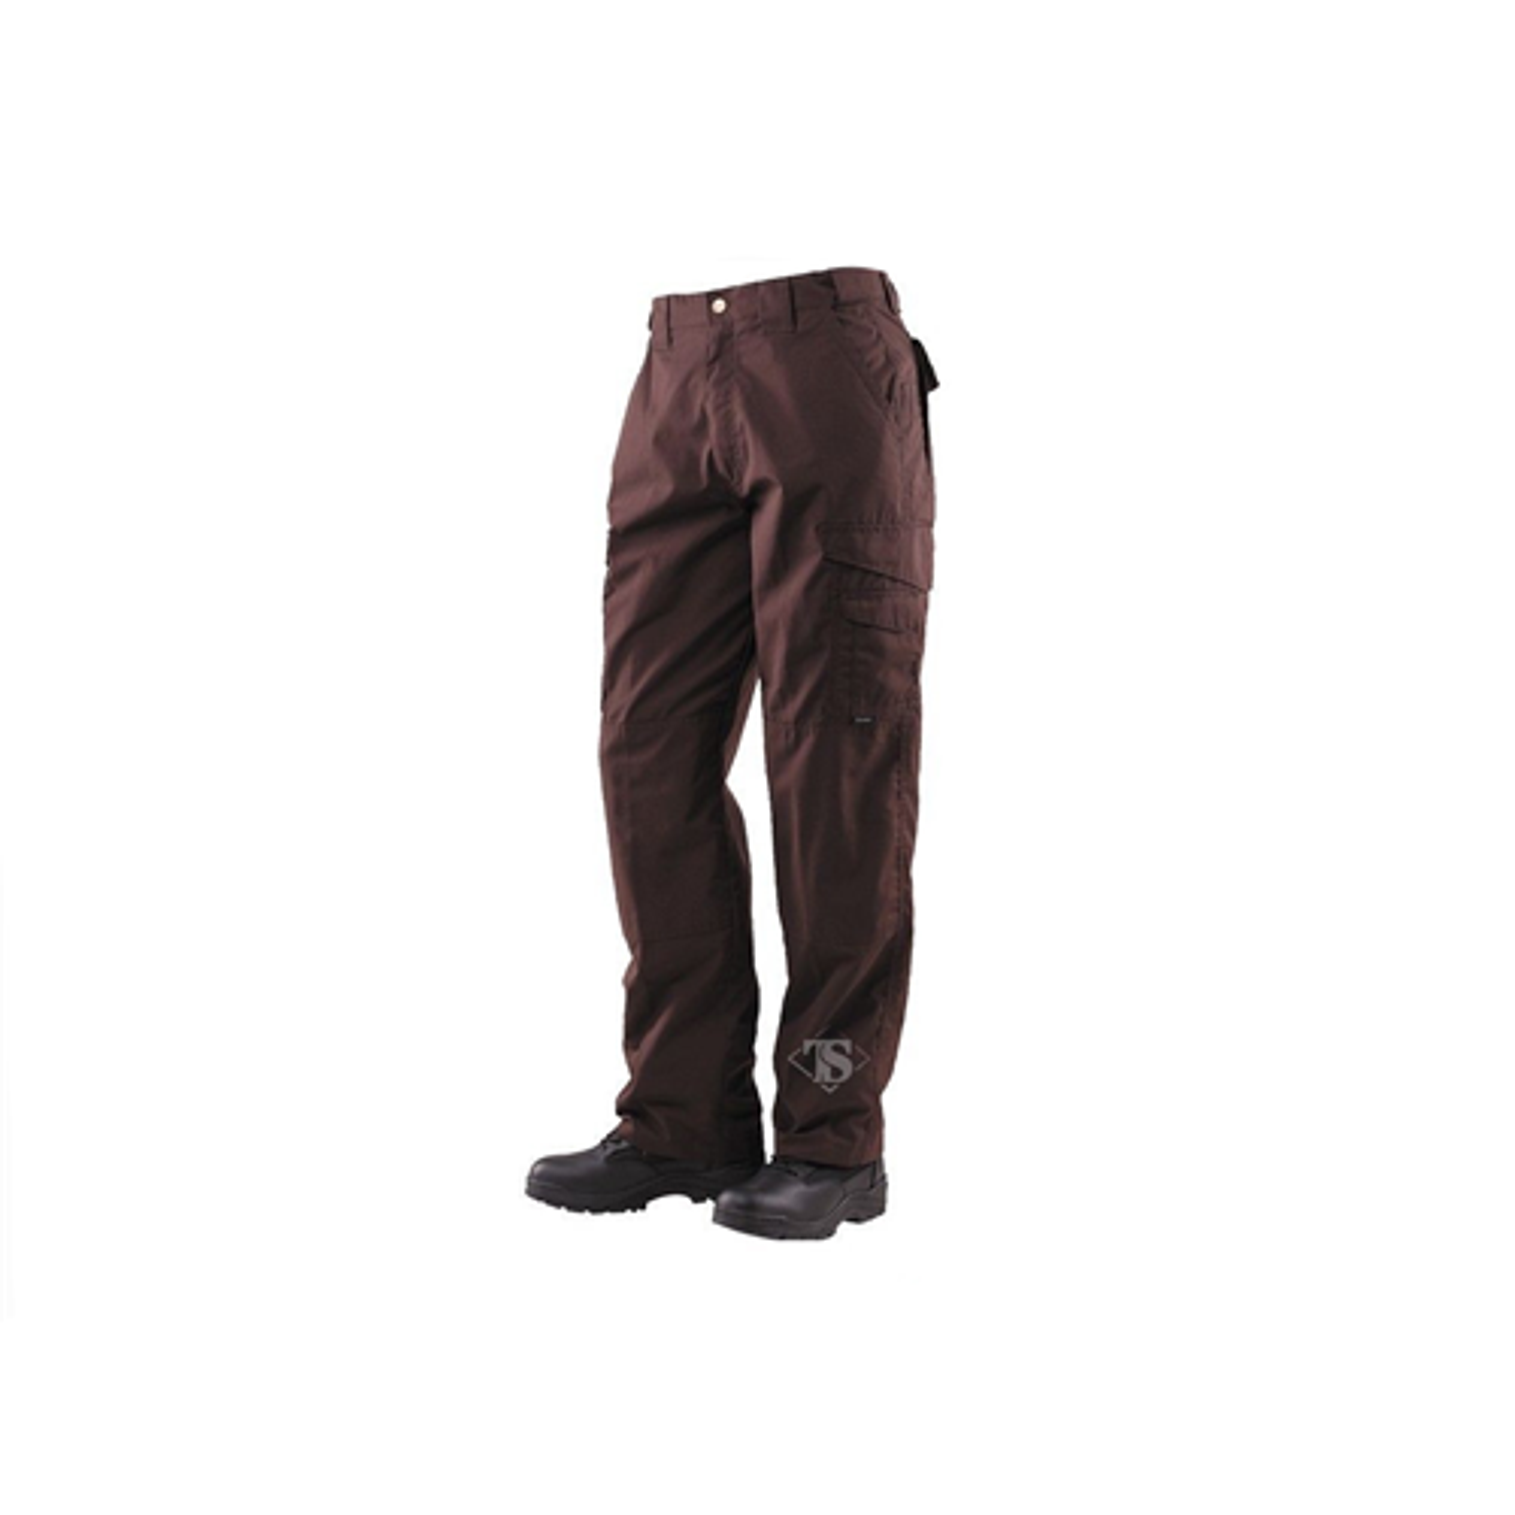 24-7 Original Tactical Pants - 6.5oz - Brown - KRTSP-1065023